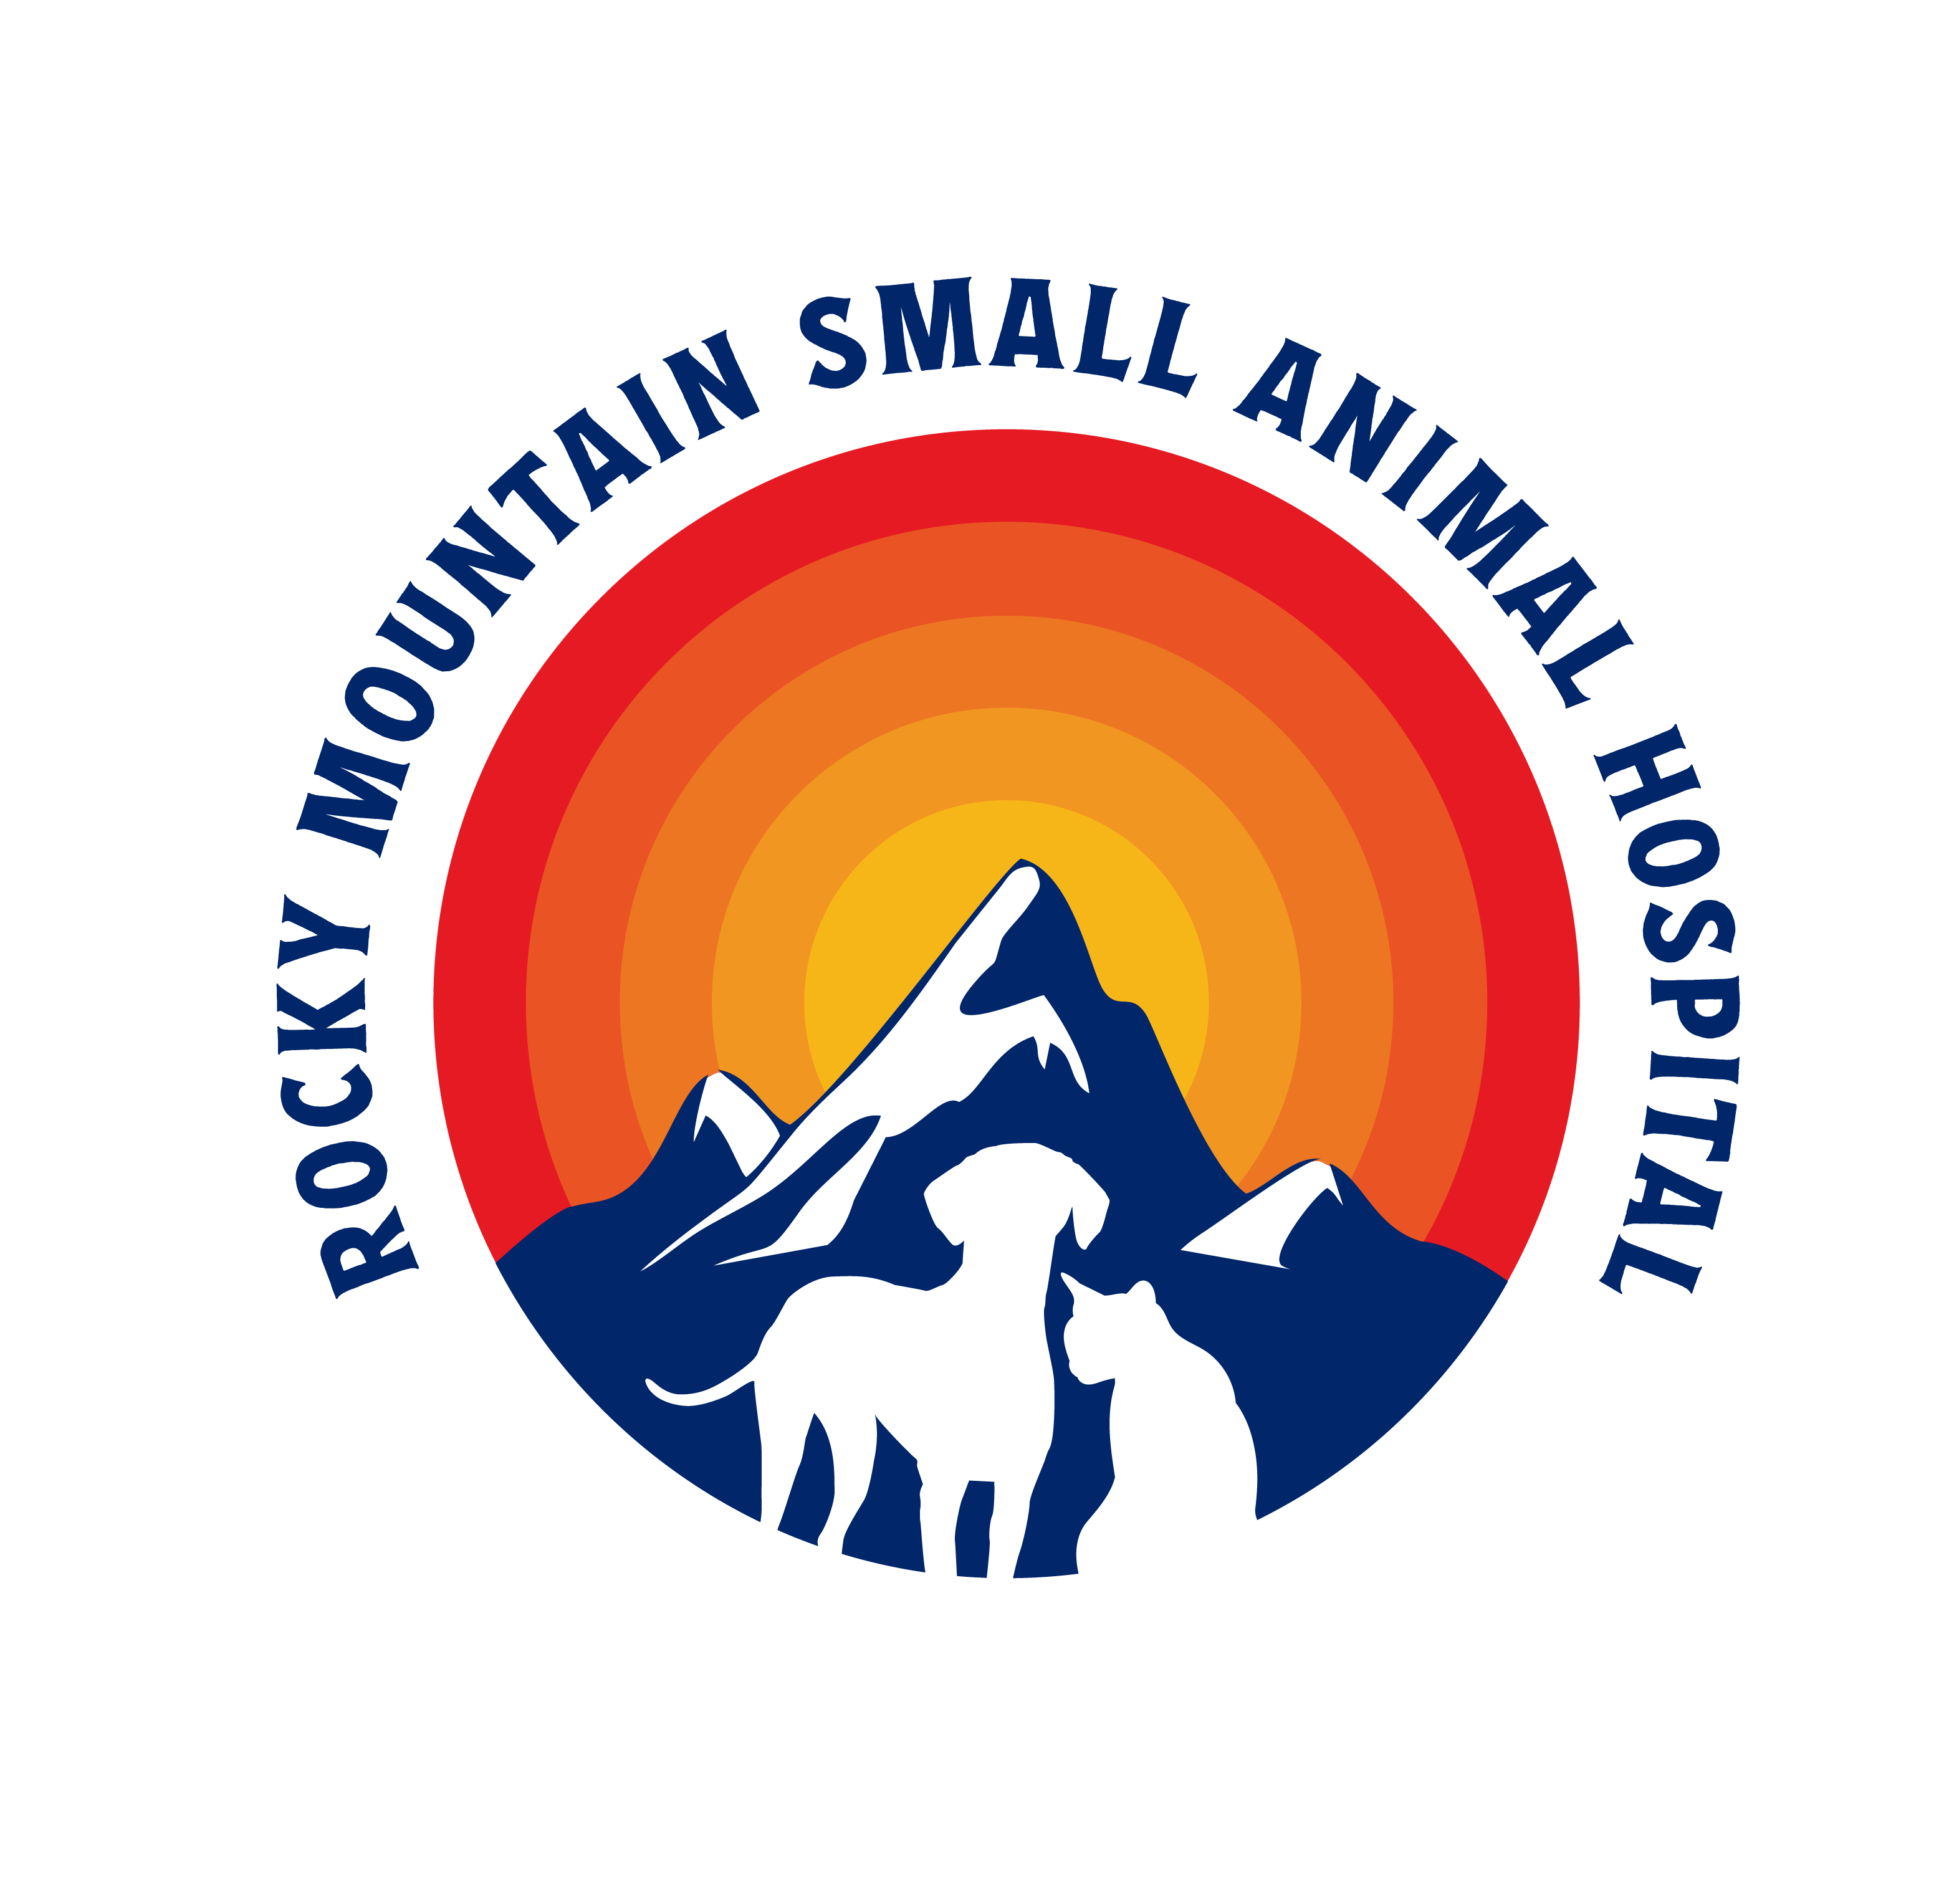 Rocky Mountain Small Animal Hospital